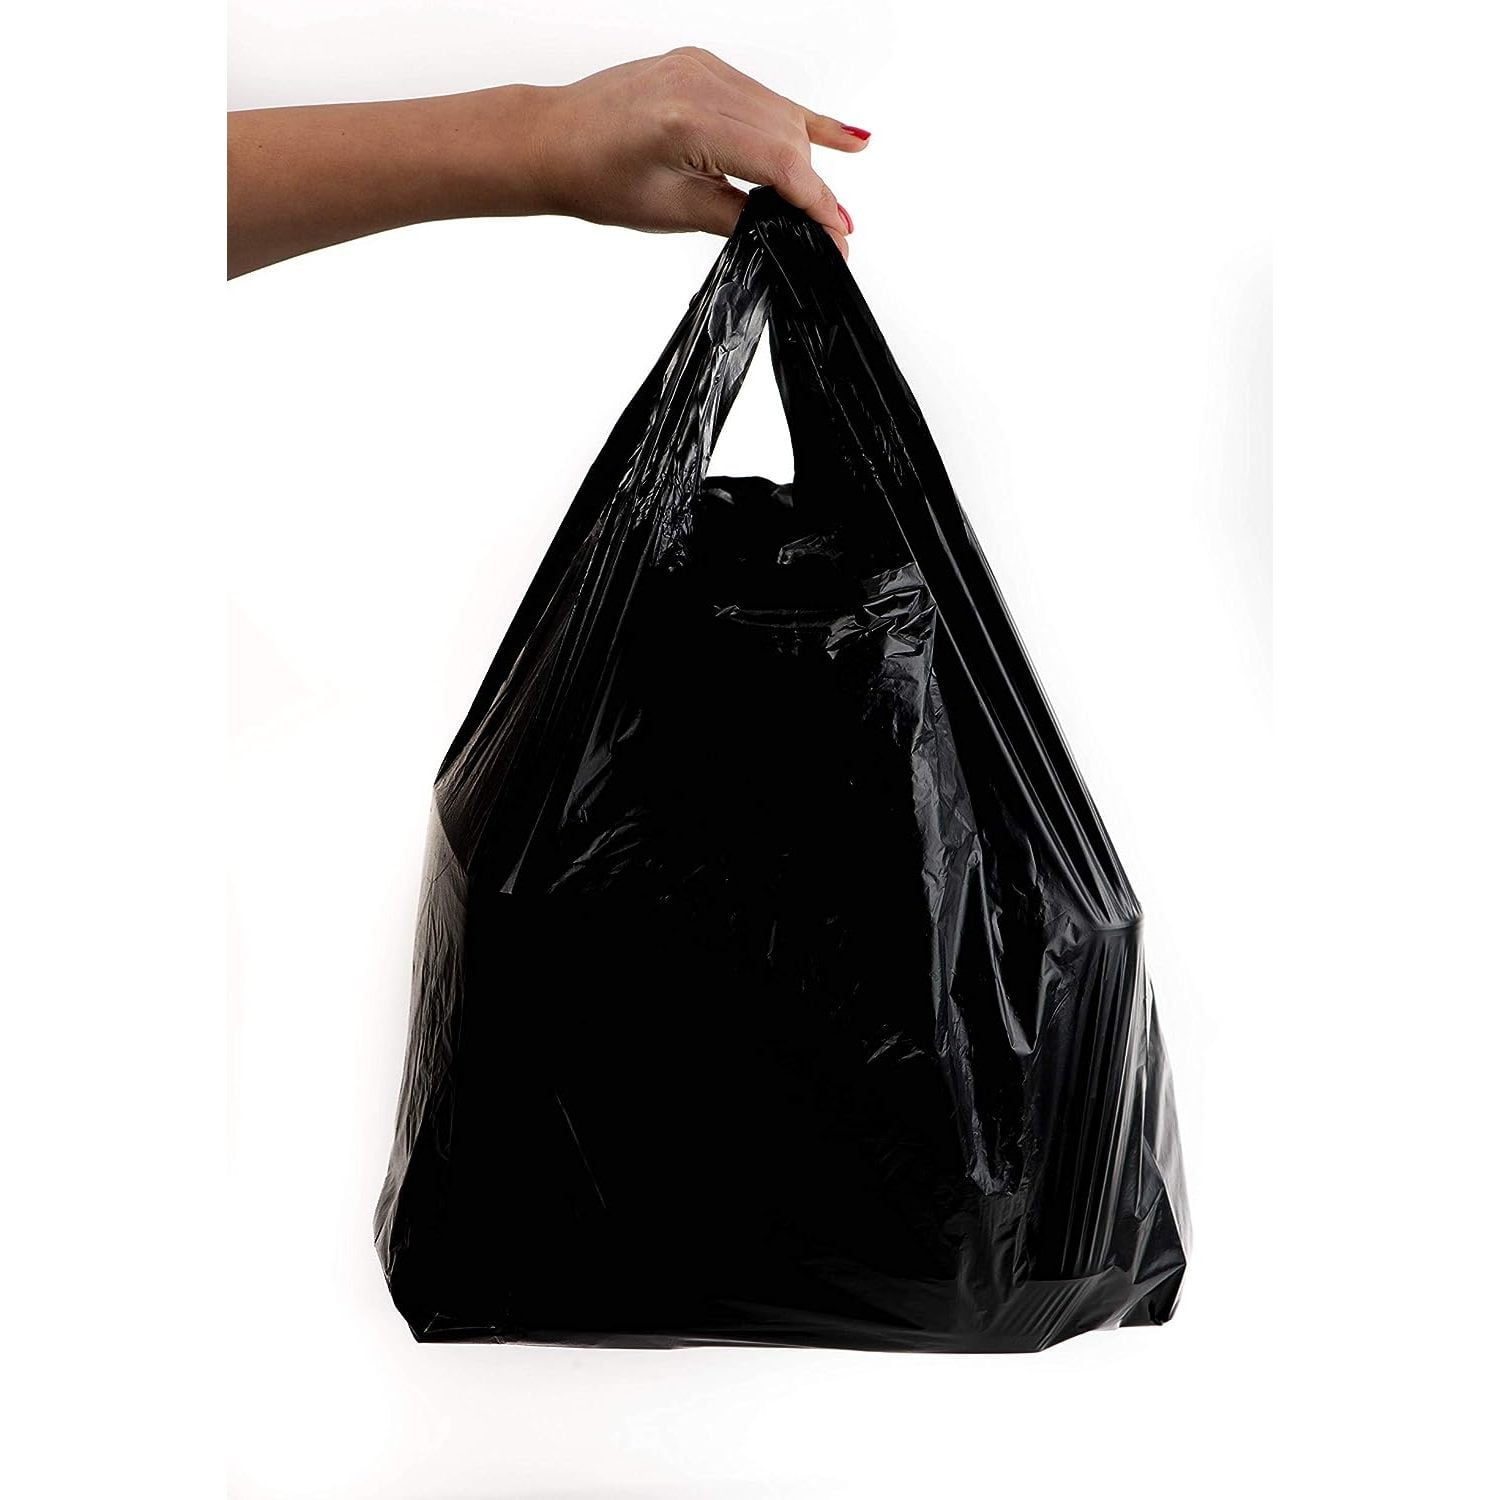 Reli. T-shirt Bags (300 Count) (Black) (11.5 x 6.5 x 22) - Black Plastic  Bags (Plain) - Grocery, Shopping Bag, Restaurants